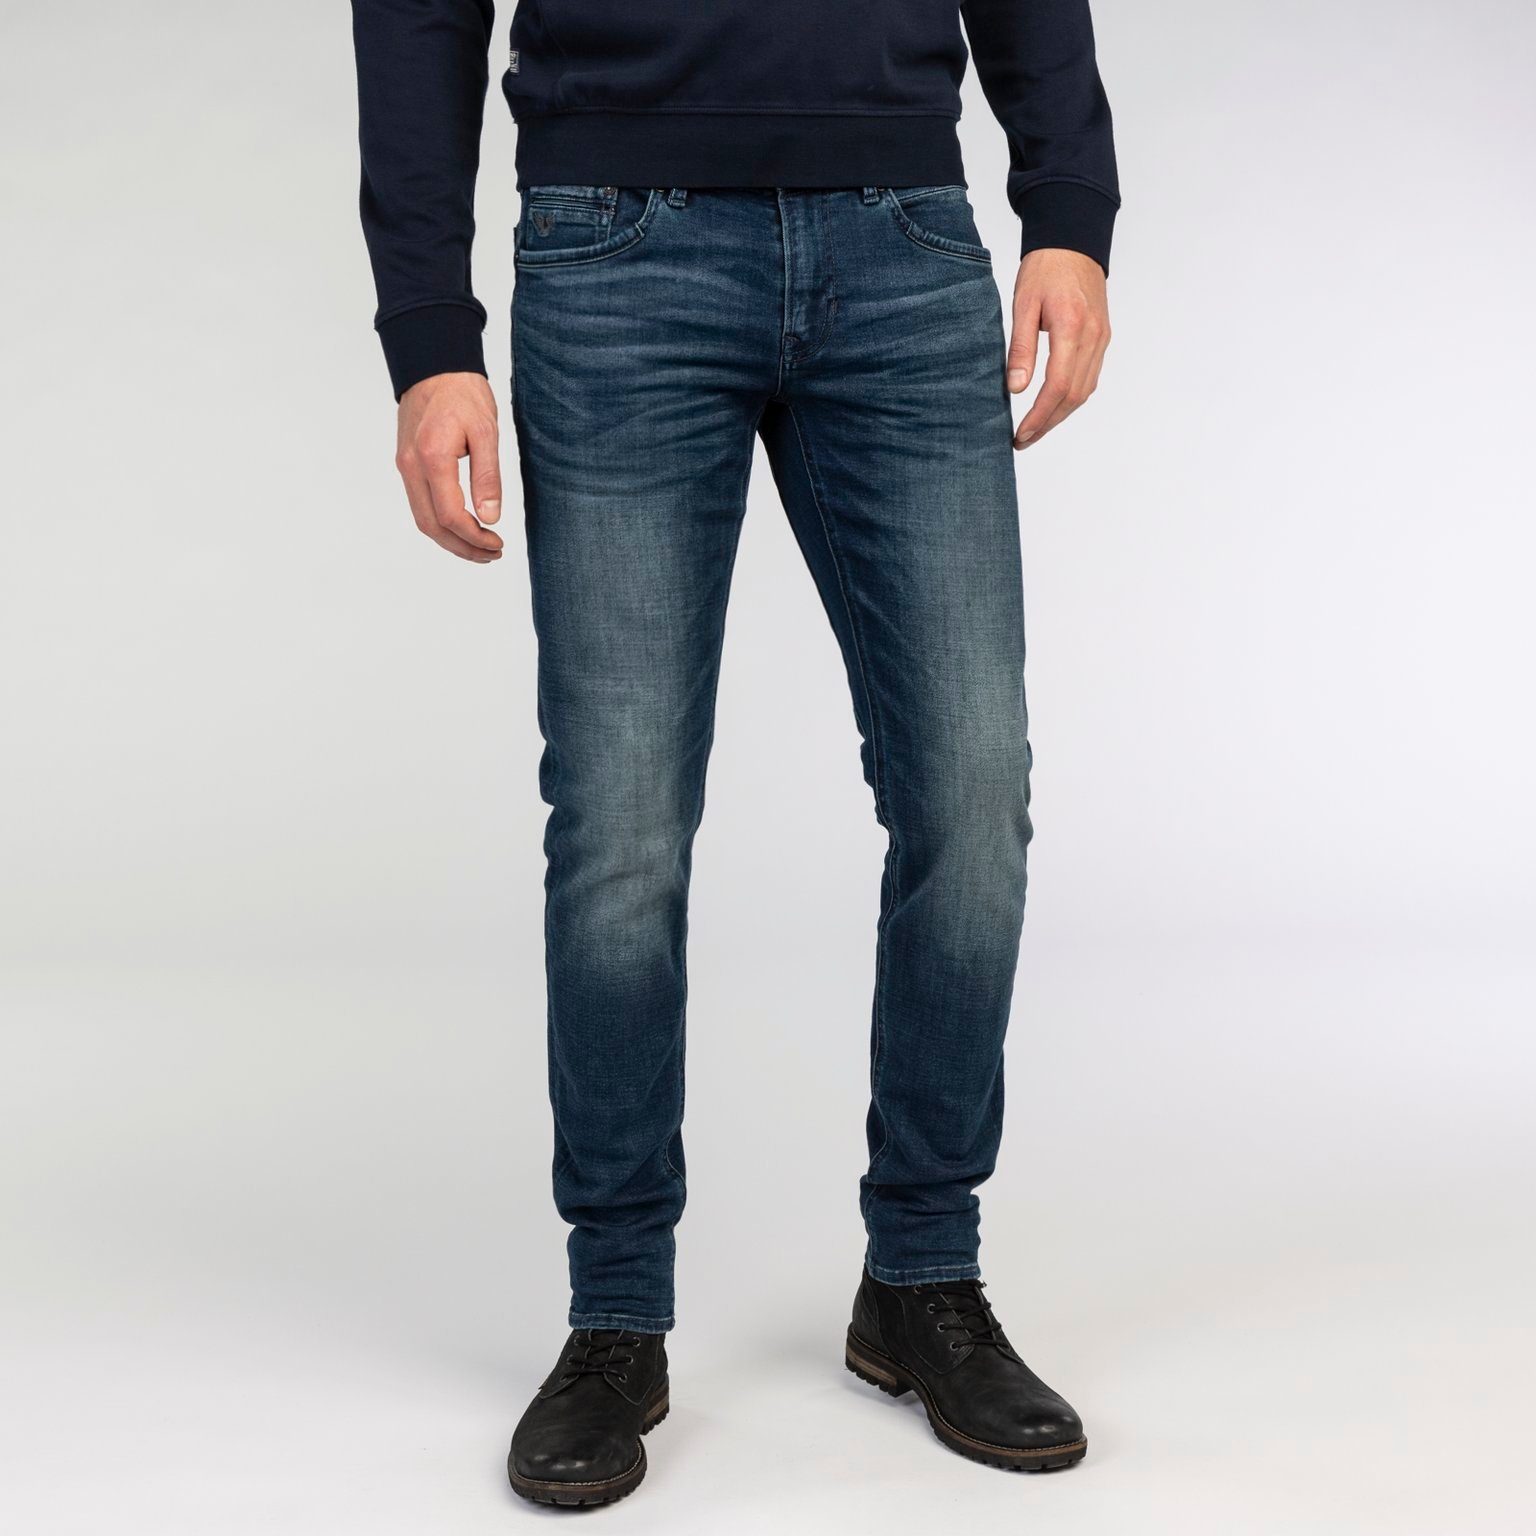 PME LEGEND PTR140-DBI 5-Pocket-Jeans LEGEND PME indigo blue dark TAILWHEEL